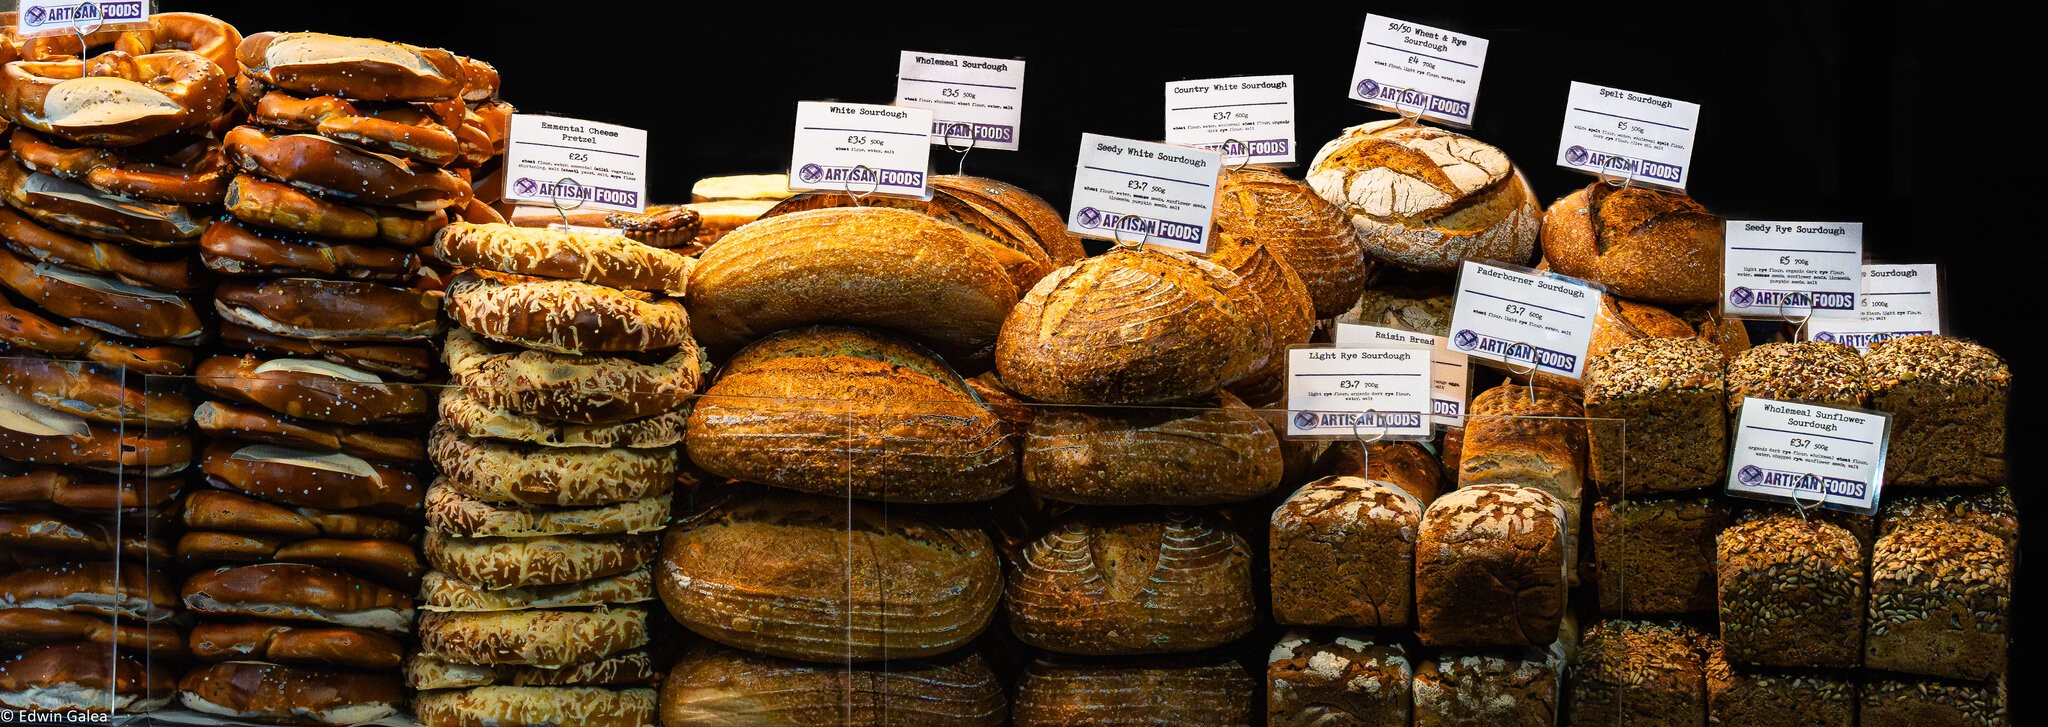 boroughmarket_bread-1.jpg